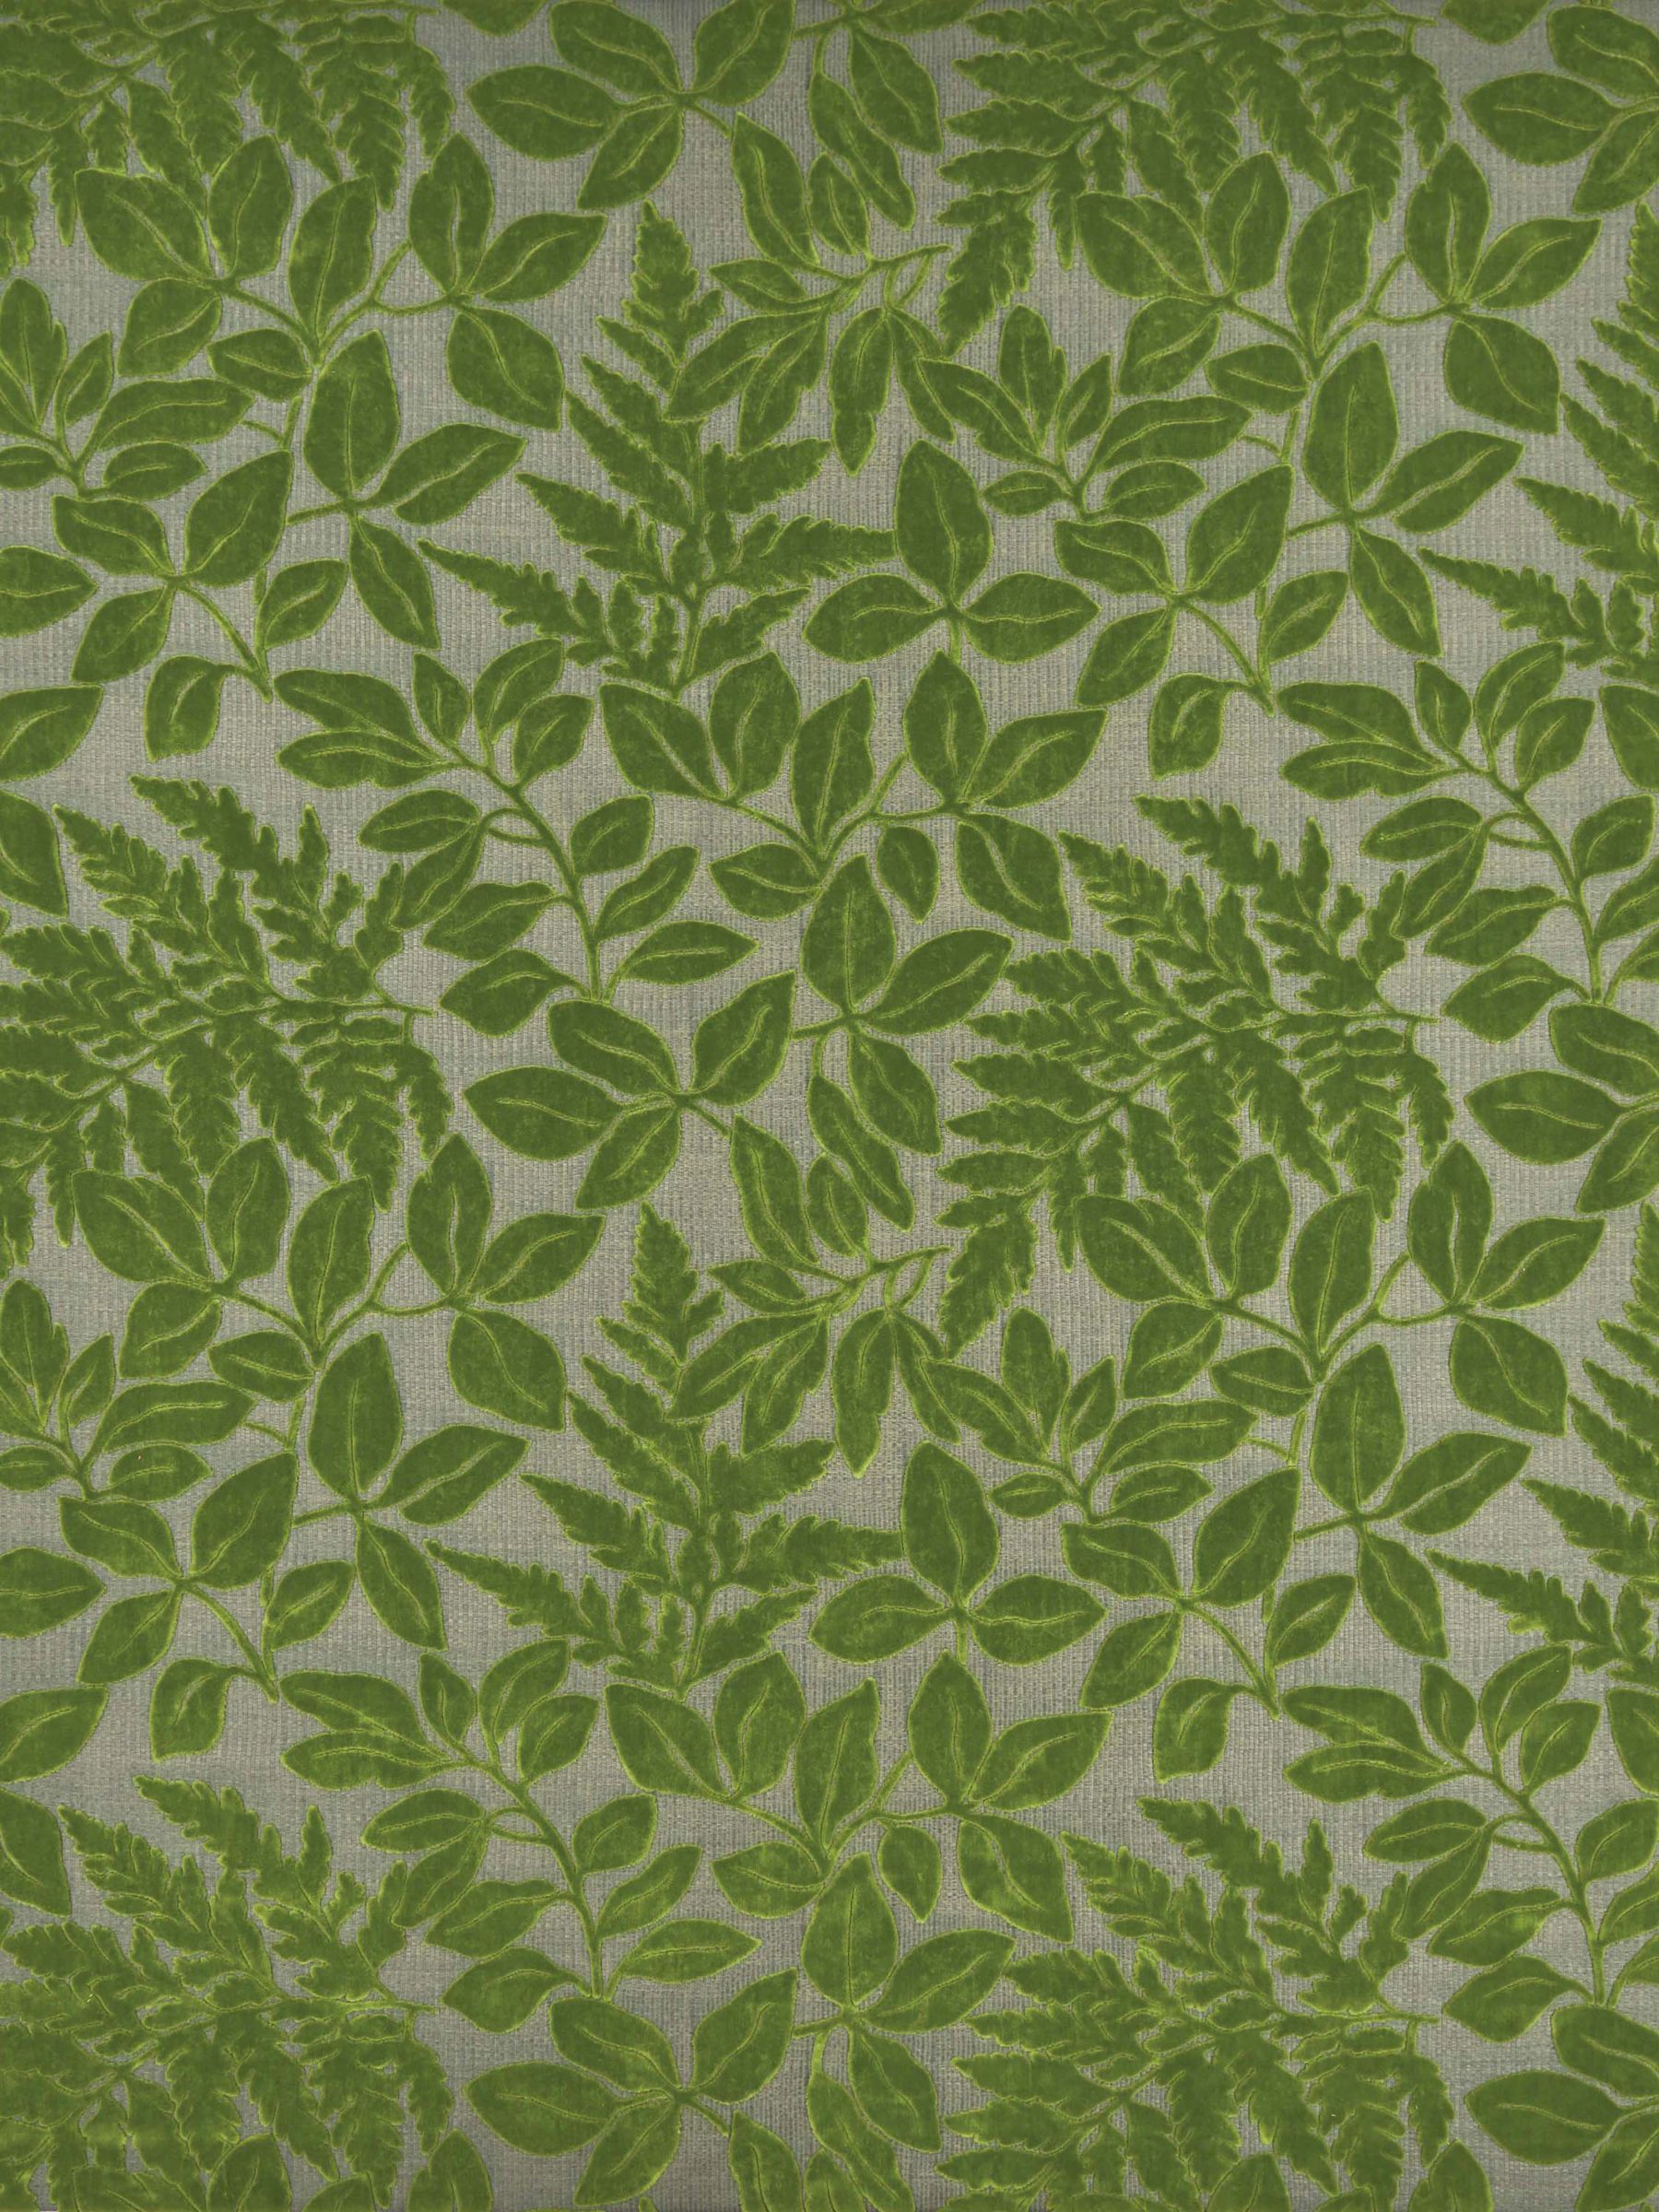 Osborne & Little Donwell Furnishing Fabric, Green